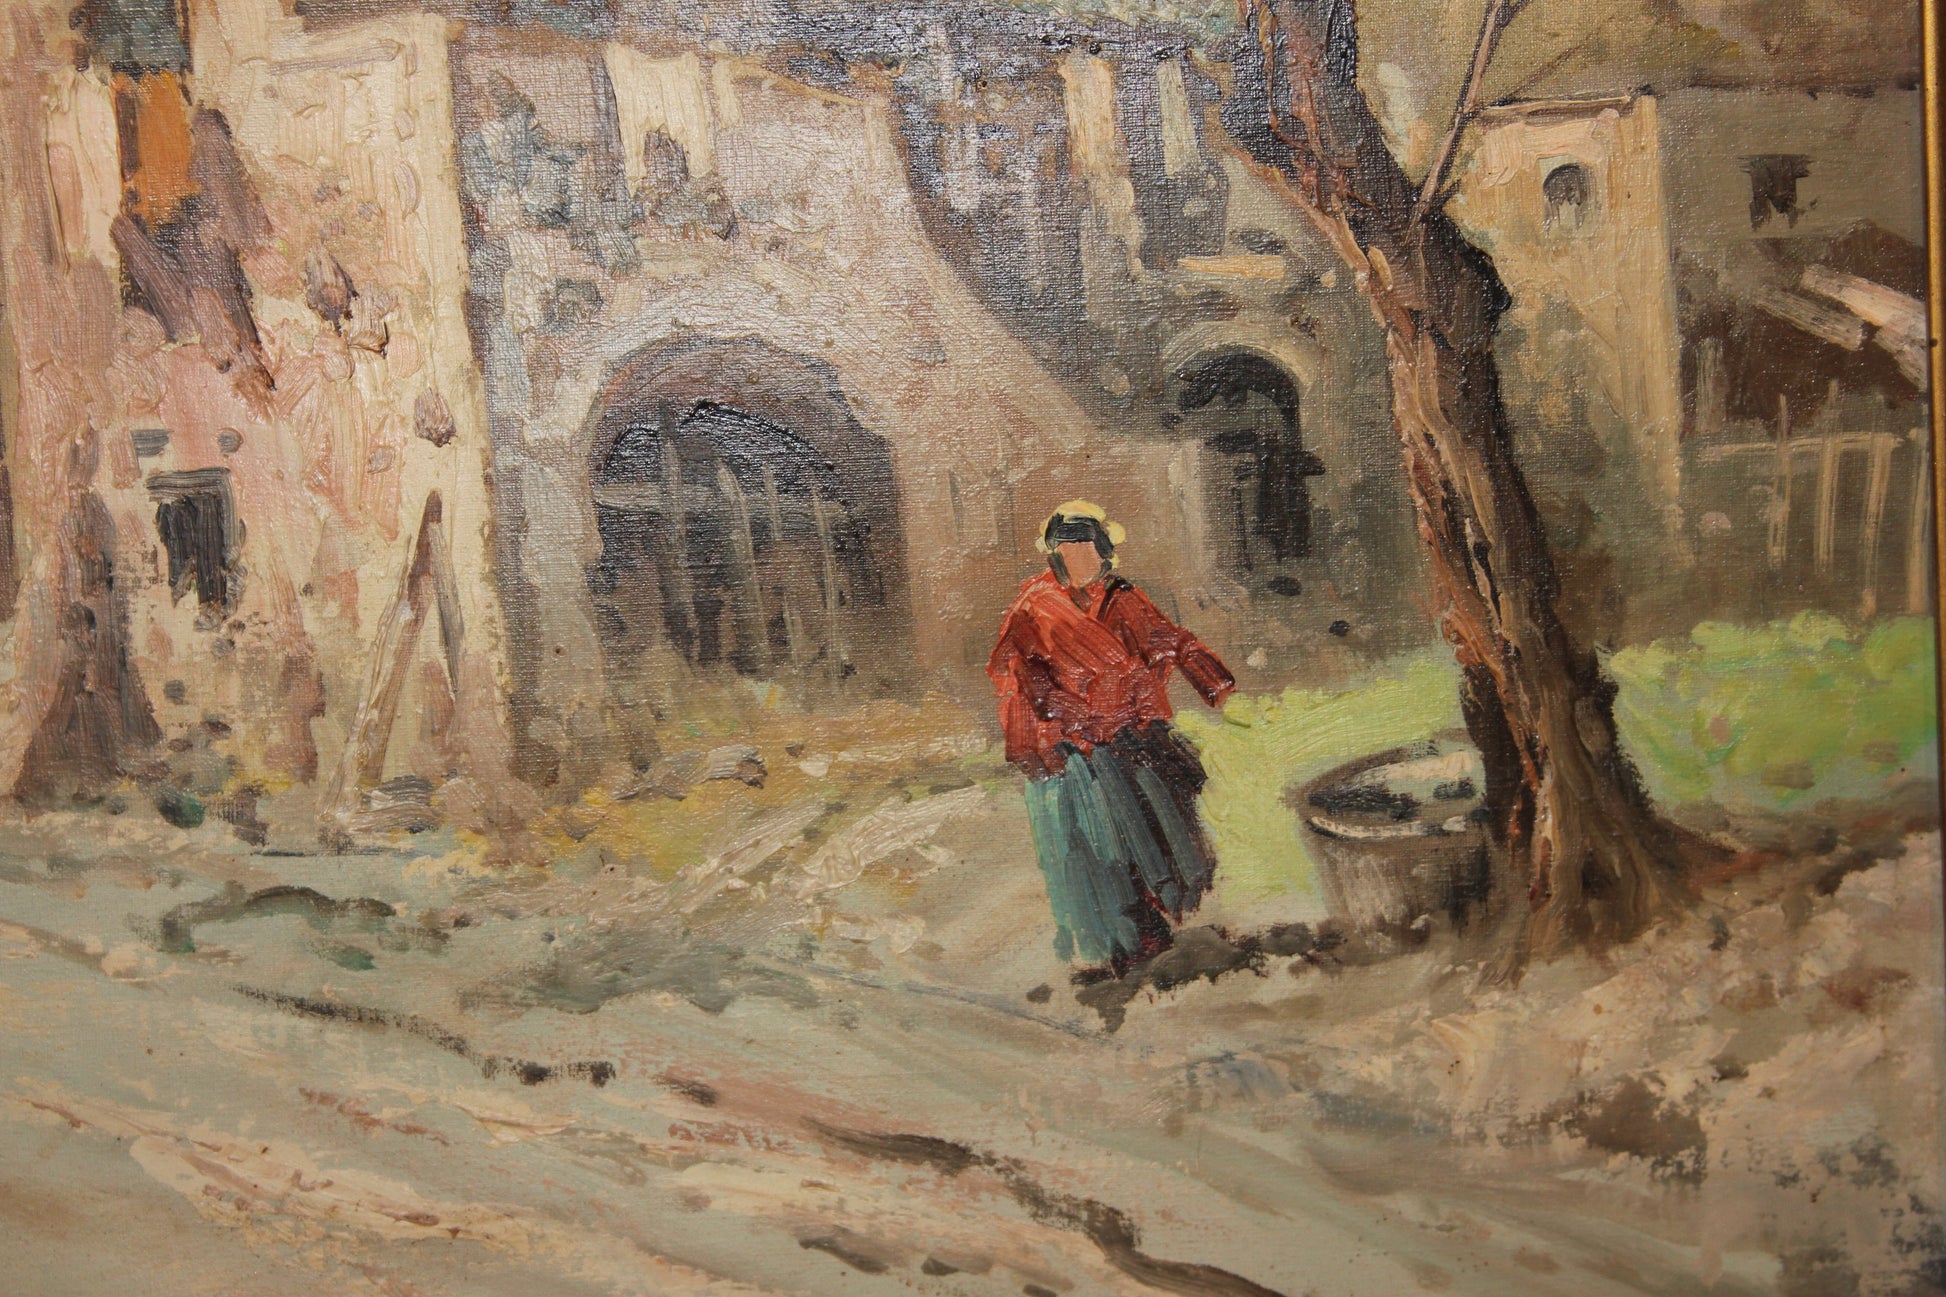 Coppia di oli su tela Raffigurante Paesaggi campestri - Augusto Radice (1913 - ? )